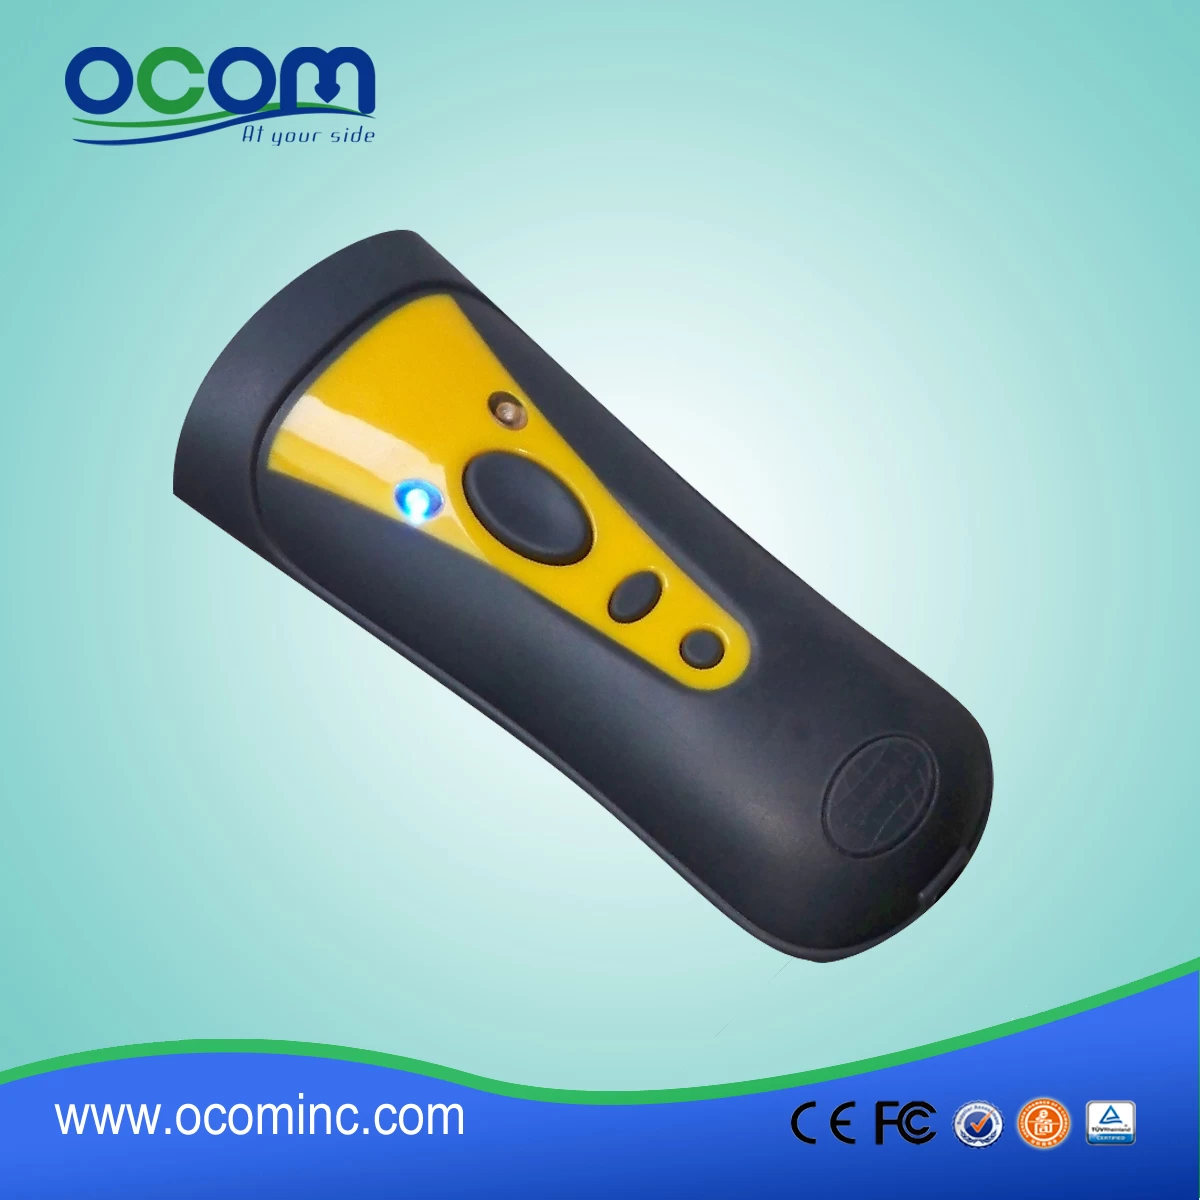 Mini Portable Bluetooth 1D Barcode Scanner(OCBS-W106)